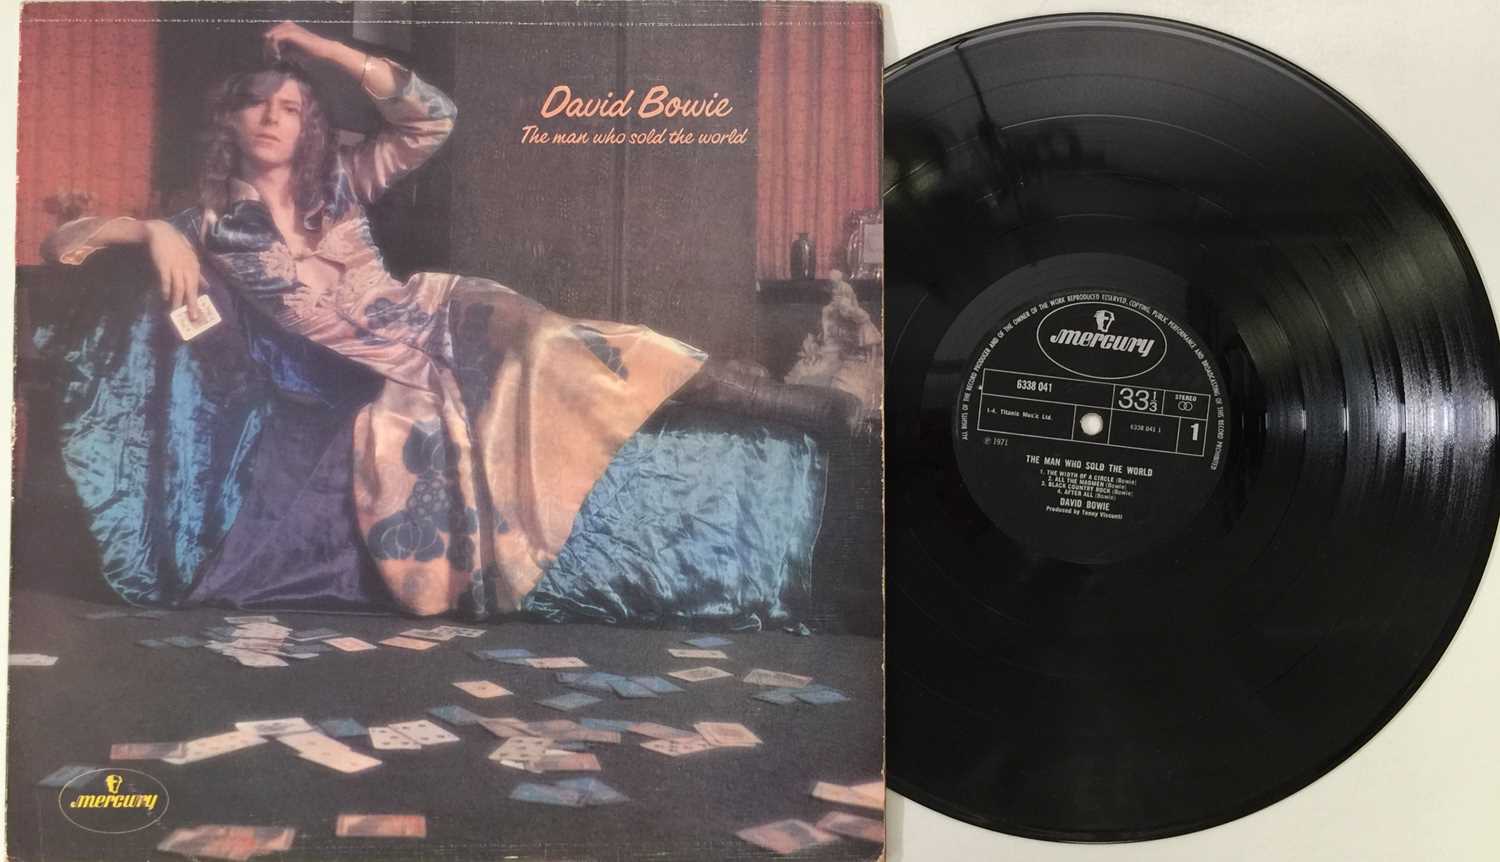 DAVID BOWIE - THE MAN WHO SOLD THE WORLD LP (UK ORIGINAL 'DRESS SLEEVE' - 'TONNY' CREDIT - MERCURY 6